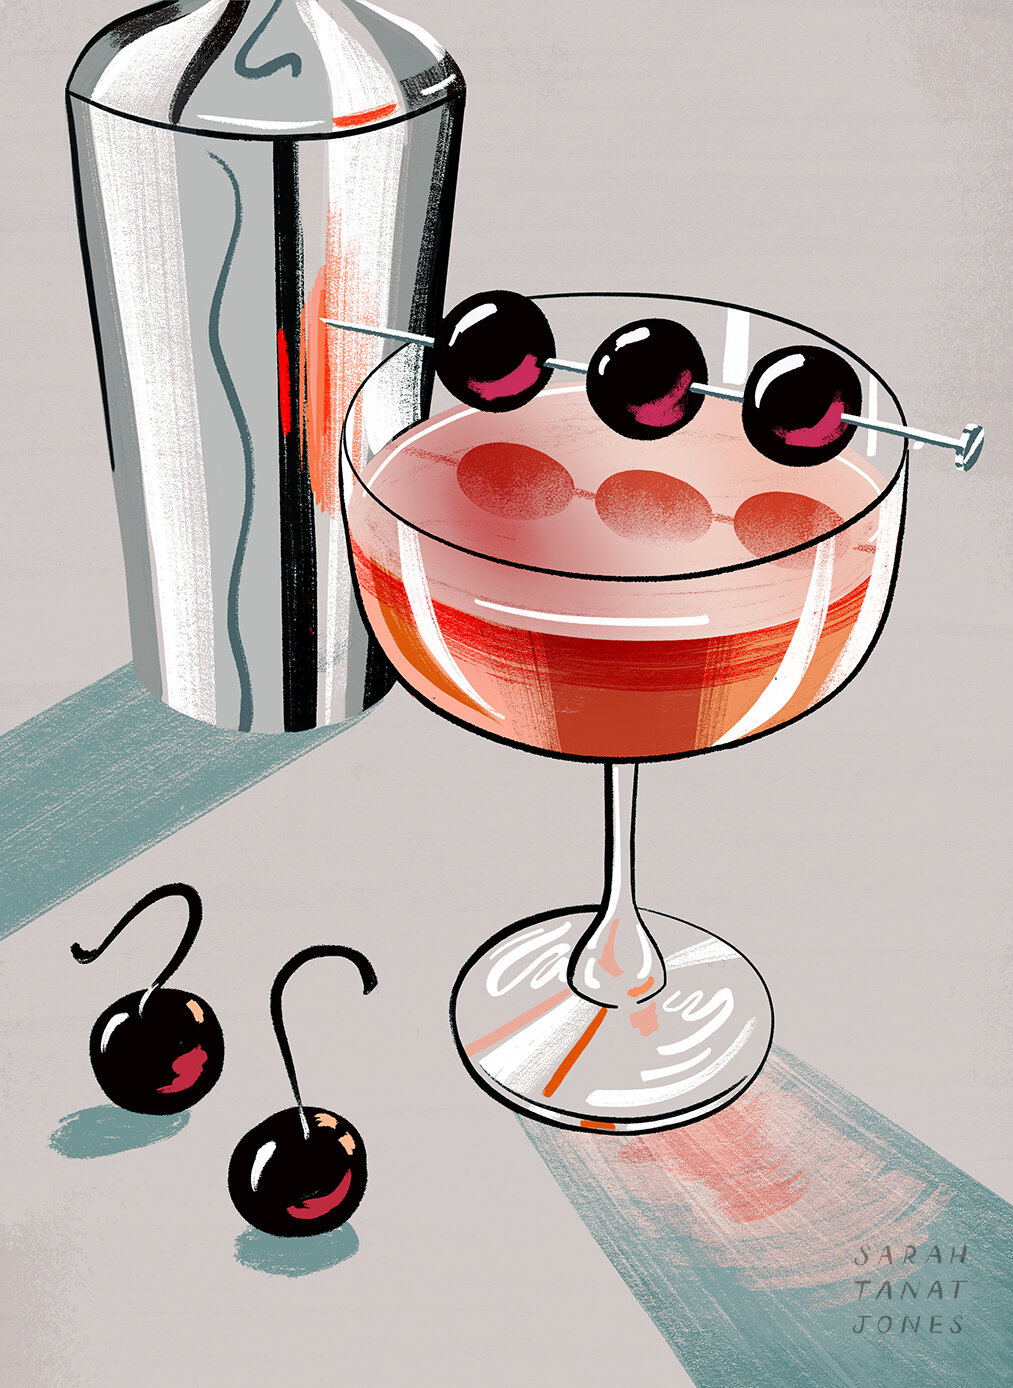 sarah tanat jones manhattan cocktail illustration web.jpg